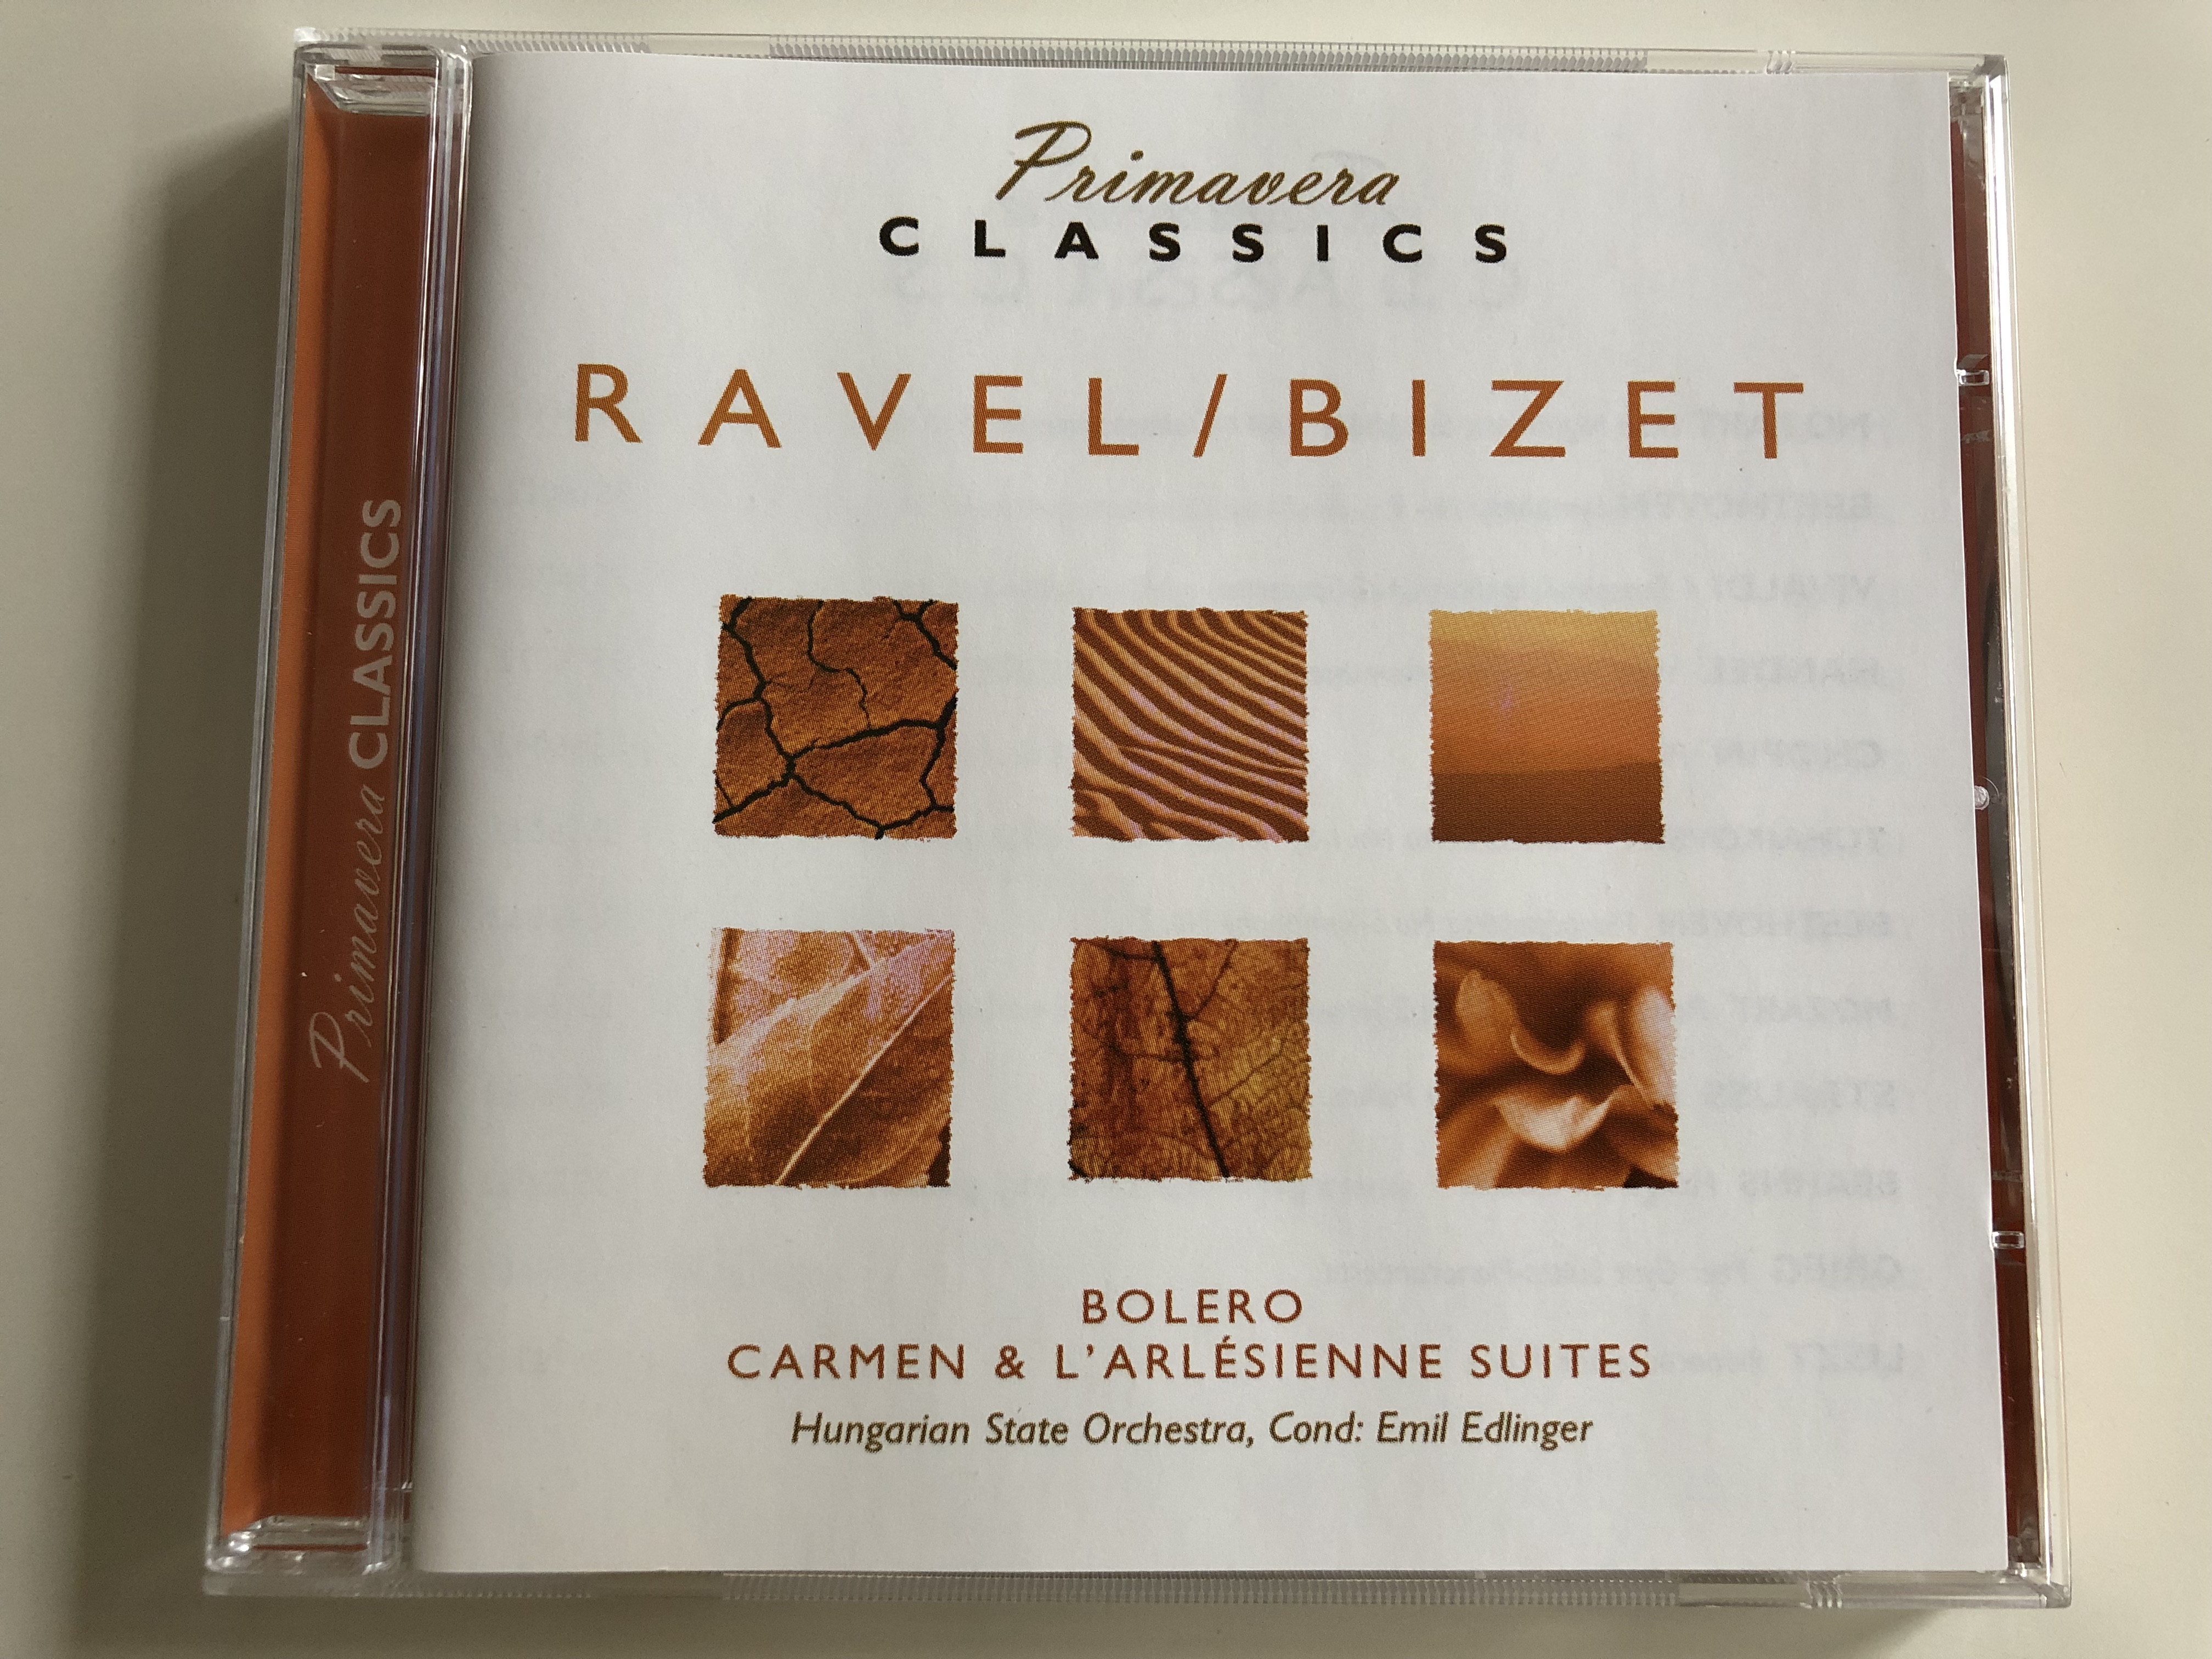 Ravel / Bizet / Bolero, Carmen & L'arlesienne Suites / Hungarian State  Orchestra / Conducted: Emil Edlinger / Primavera Classics Audio CD /  3516132 - bibleinmylanguage